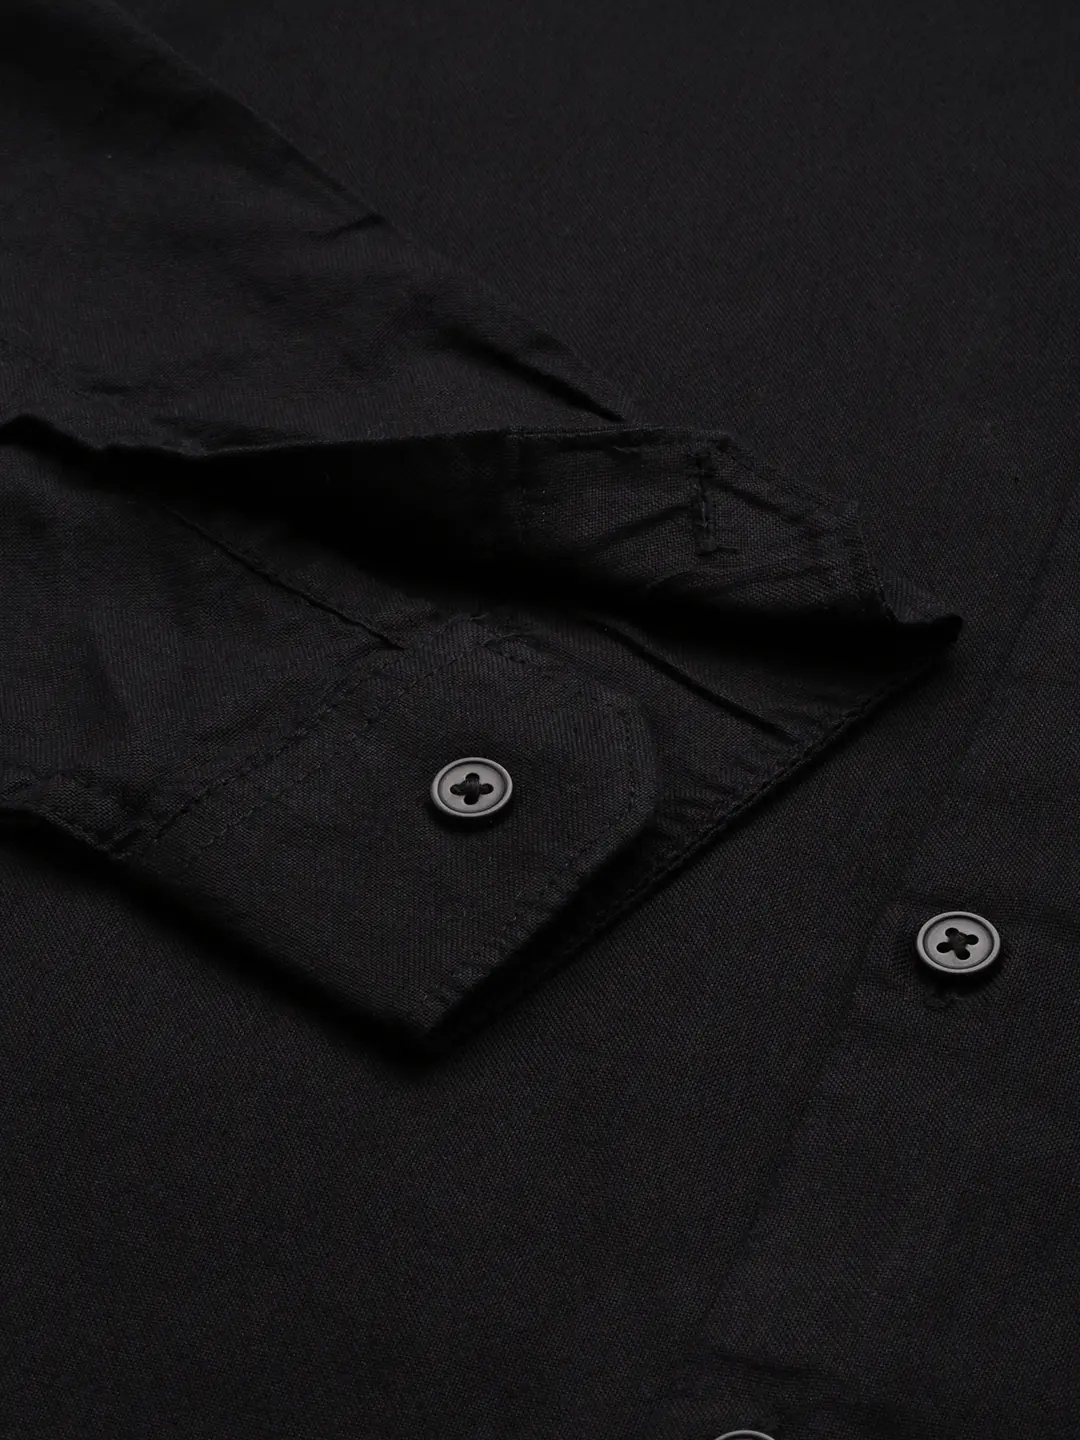 SHOWOFF Men's Spread Collar Black Solid Shirt